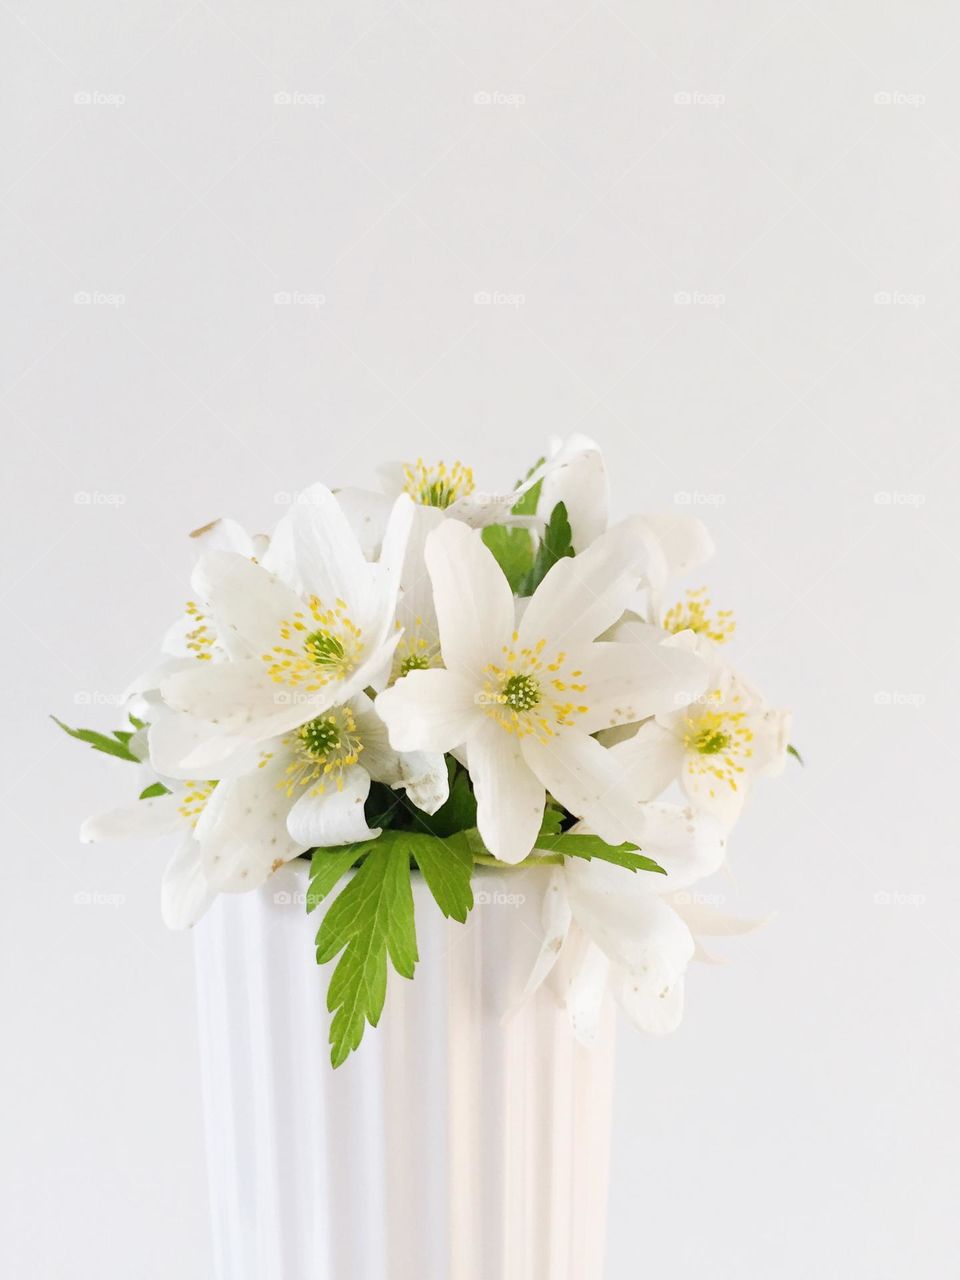 White flowers on white background 